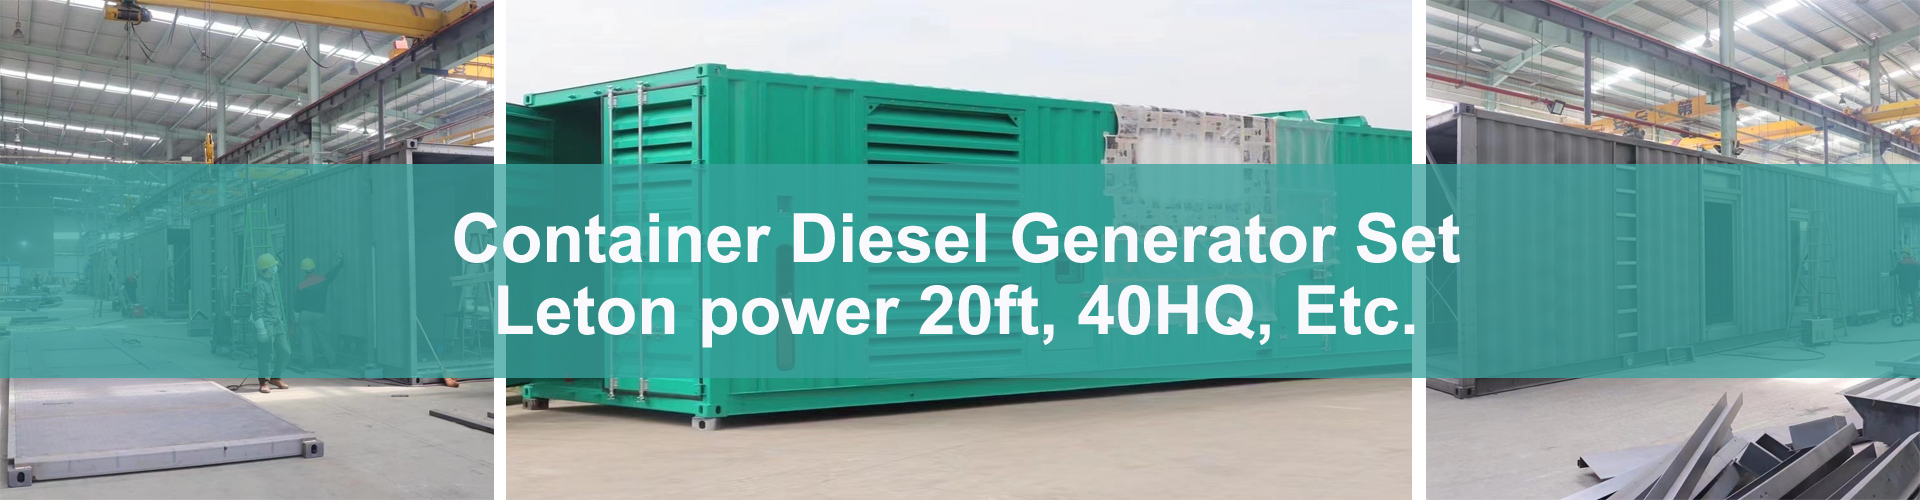 Контейнер генераторы электр станциясе дизель генераторы 20ft 40HQ контейнер электр станциясеImage